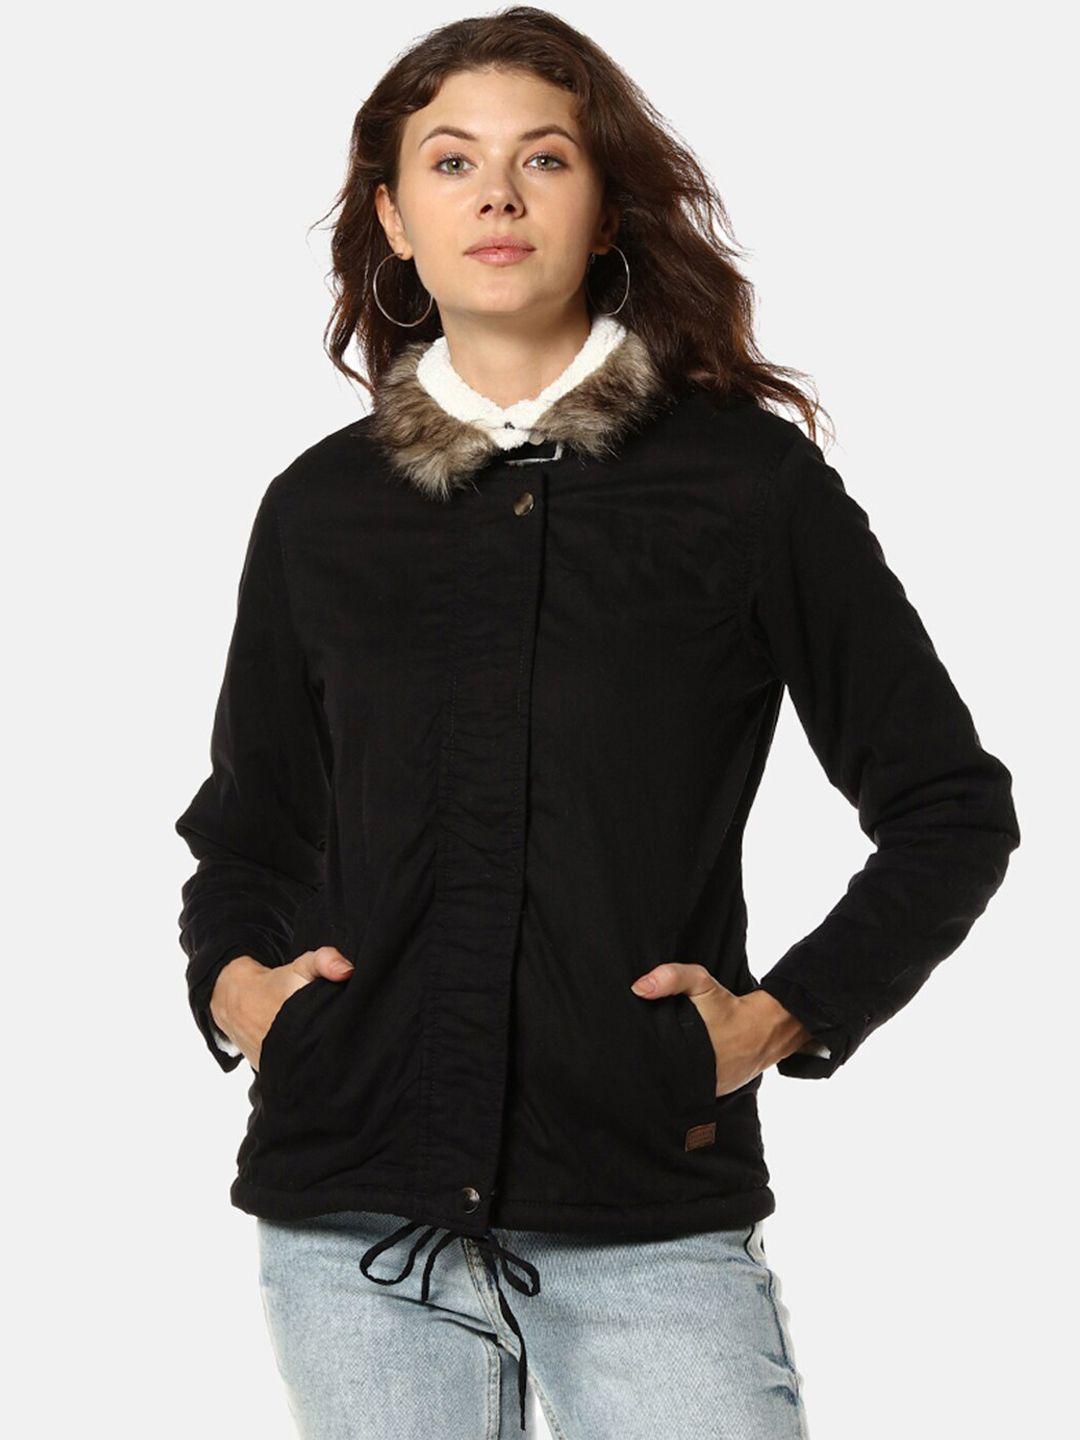 campus-sutra-women-black-windcheater-tailored-jacket